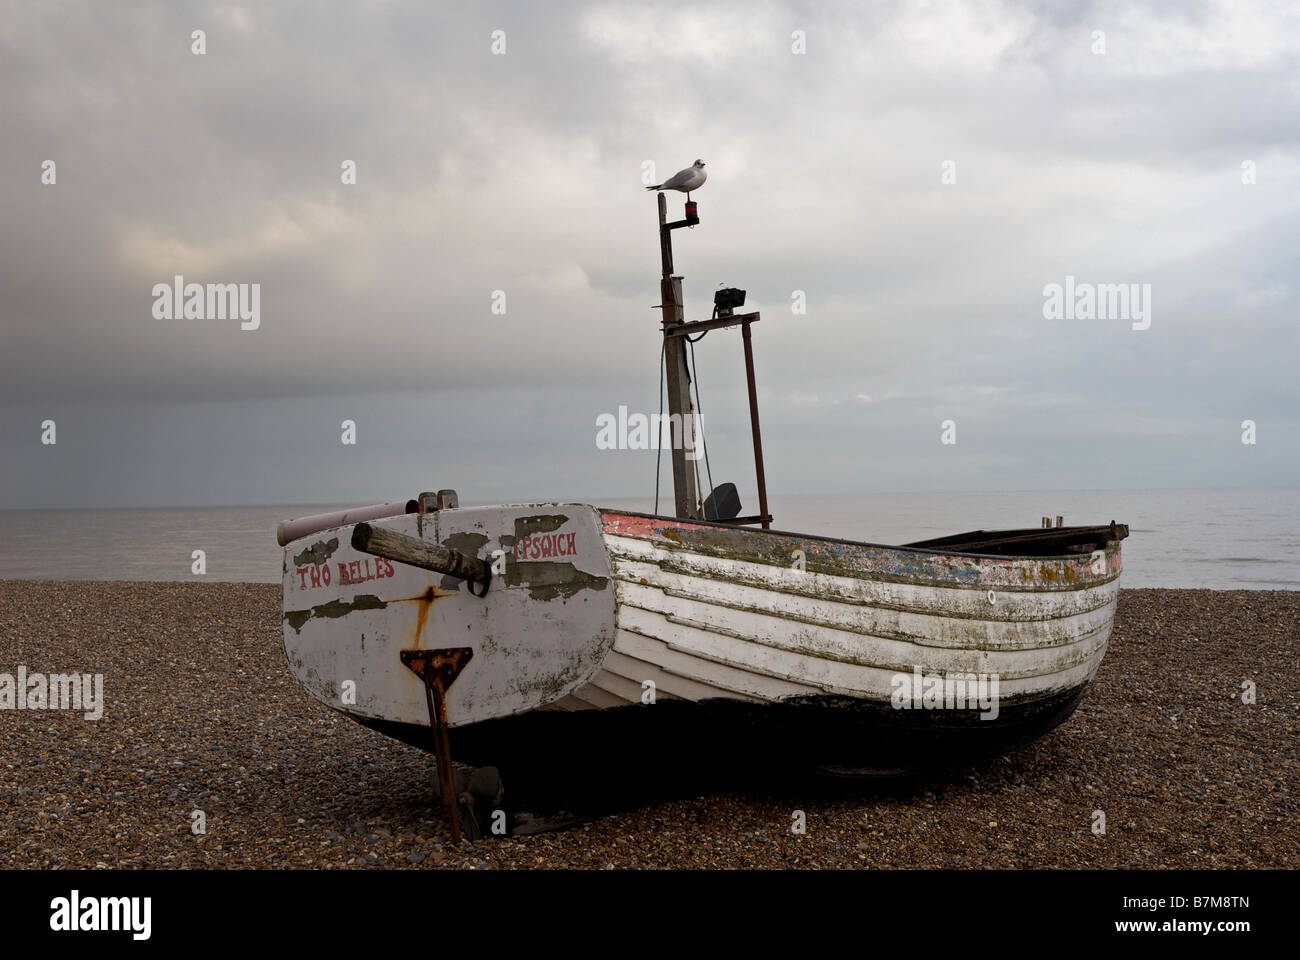 Fishing boat, Aldeburgh, Suffolk, UK. Stock Photo